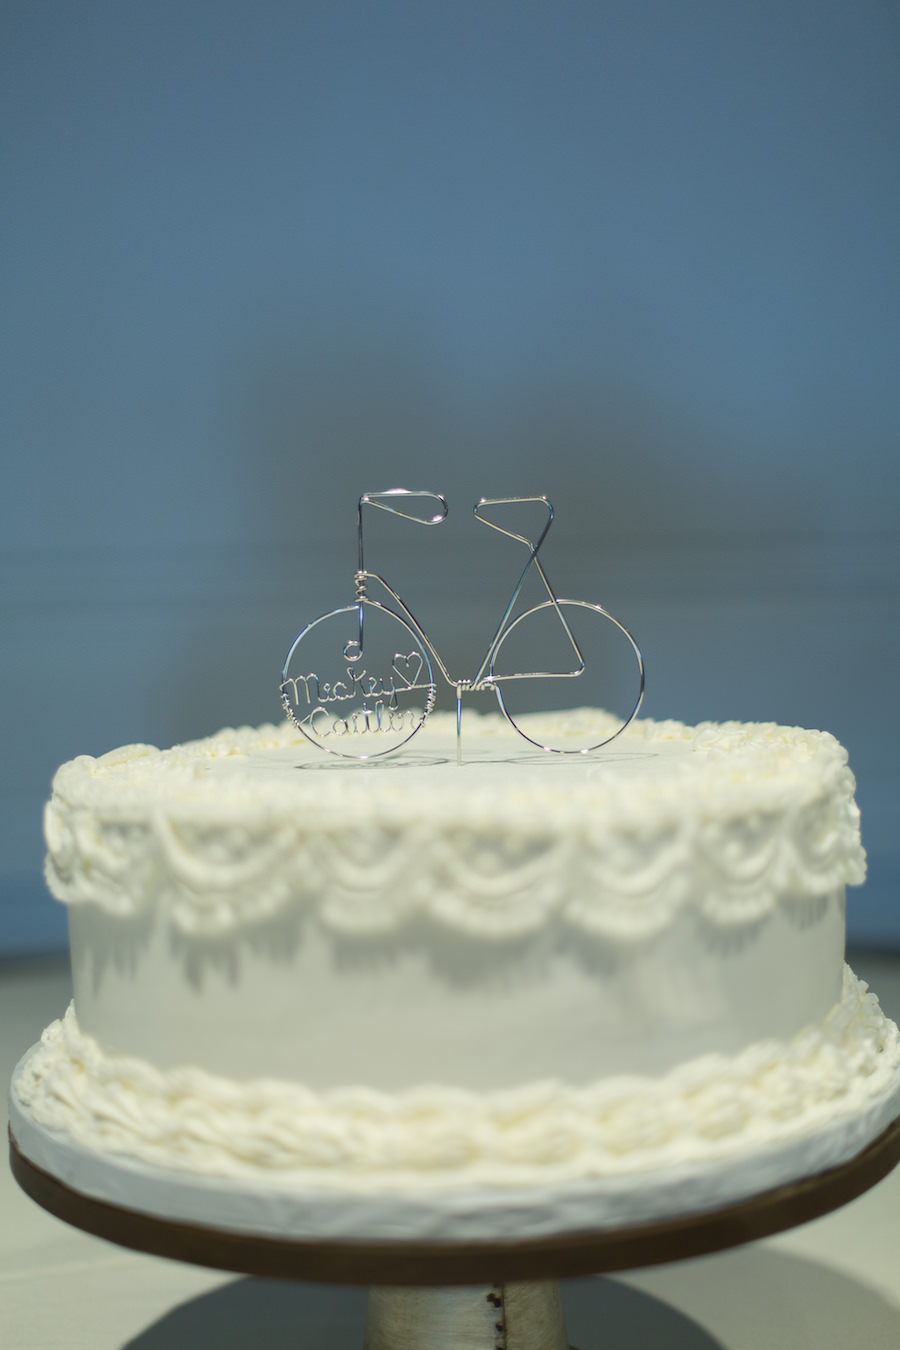 Single Tier White Wedding Cake with Ruffle Lace Design and Custom Bicycle Wedding Cake Topper | Saint Petersburg Wedding Photographer Roohi Photography